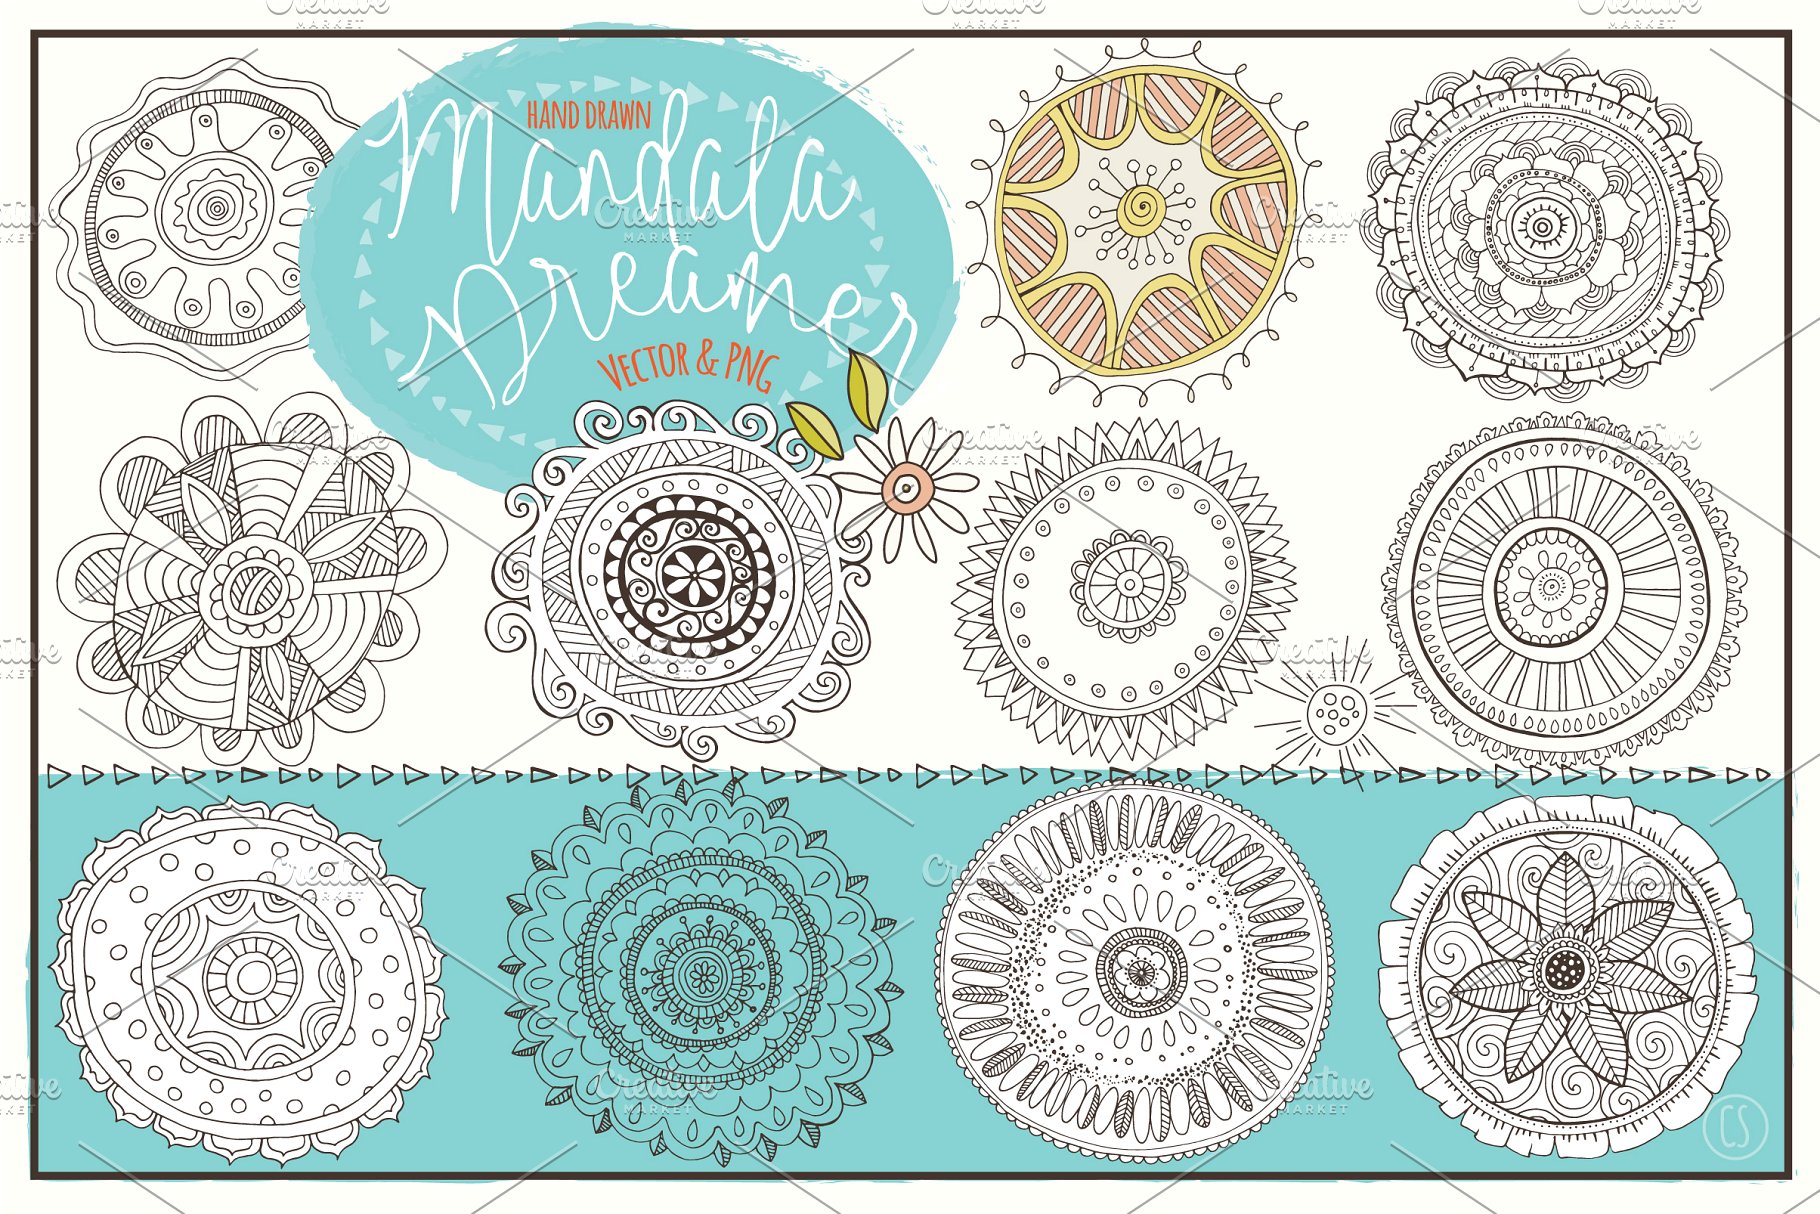 曼荼罗手绘矢量插图 Mandala Vector Illustrations插图(3)